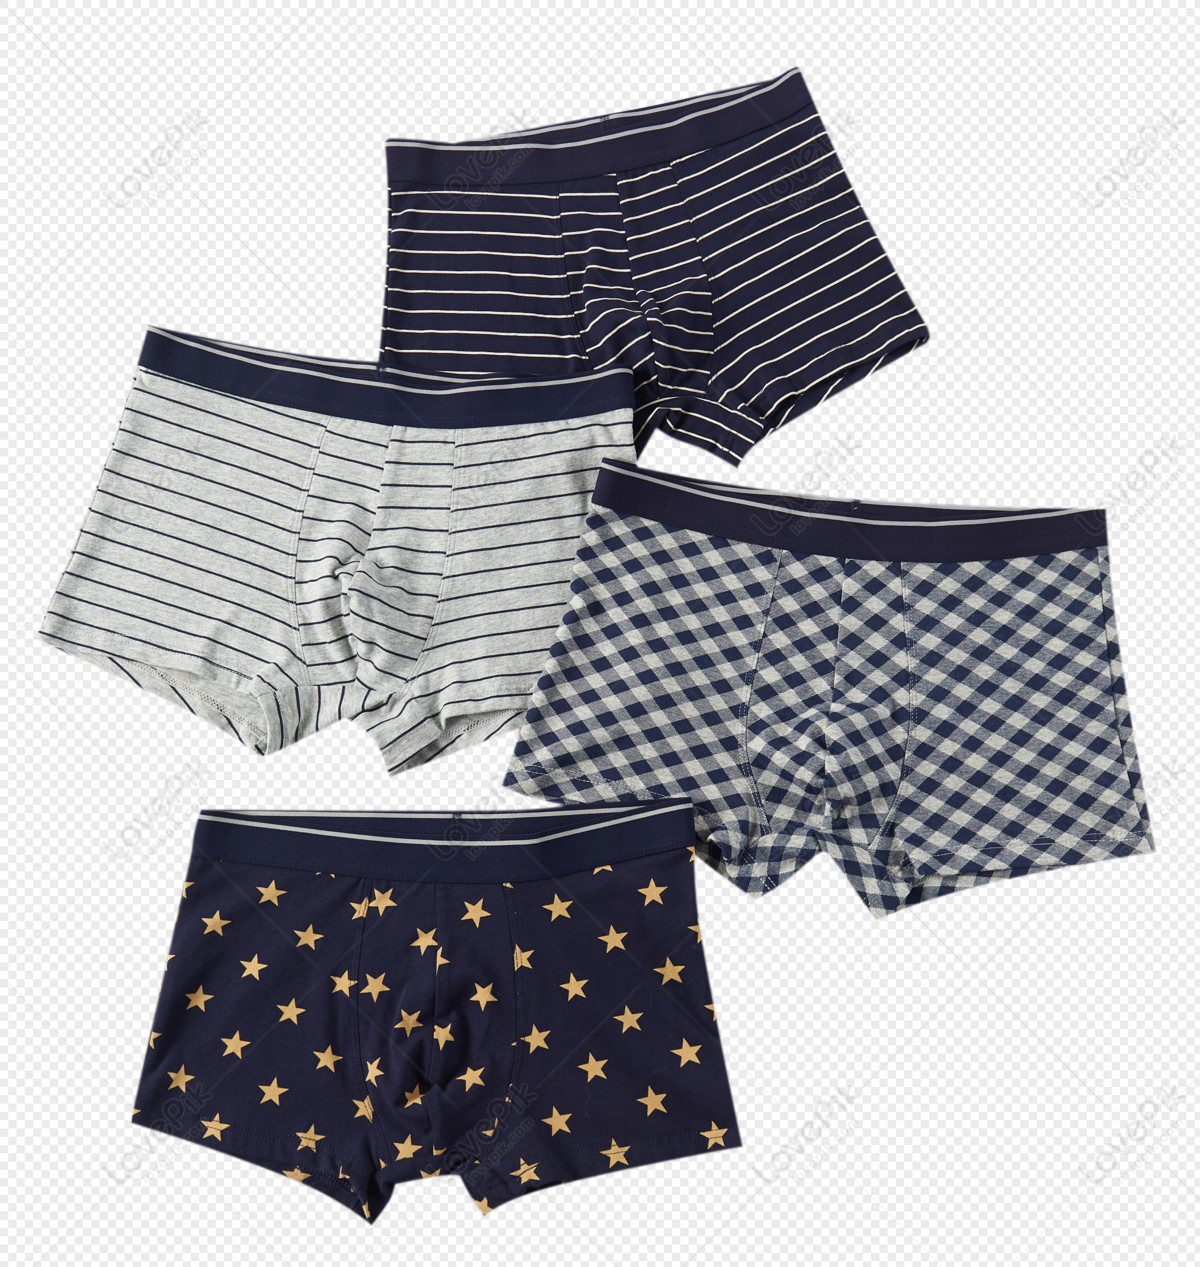 Underwear Images - Free Download on Freepik